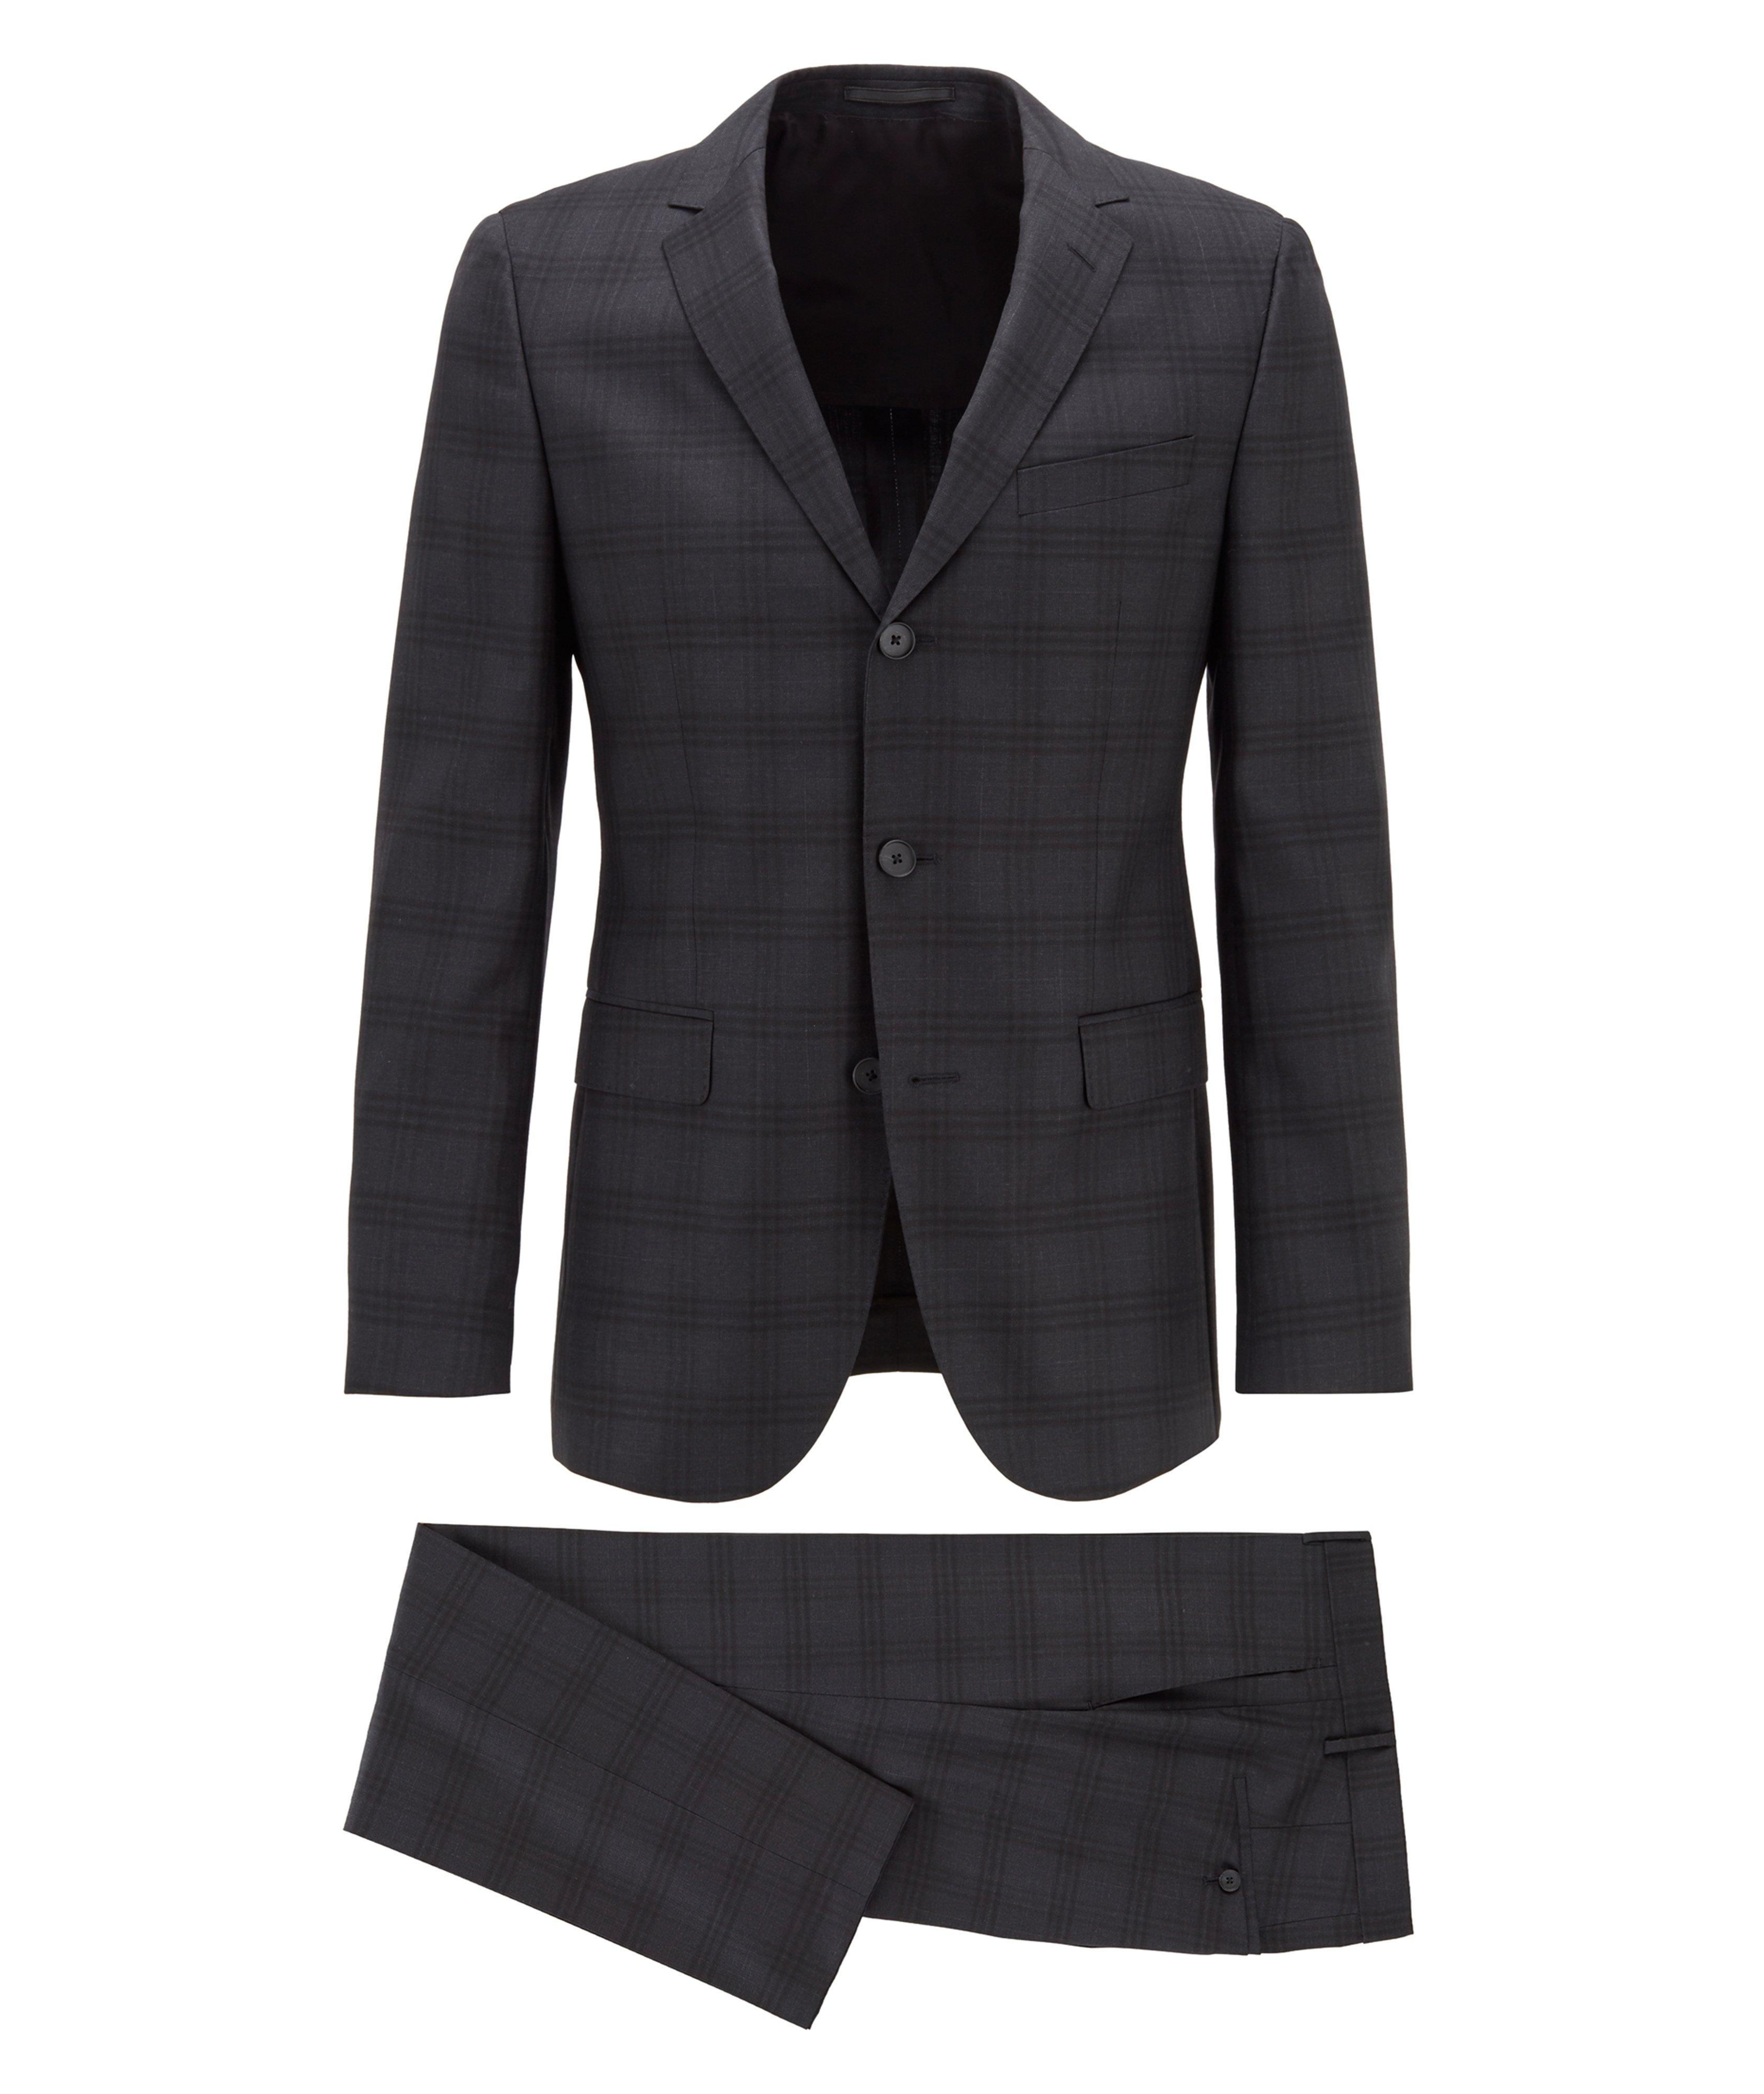 Norder/Ben2 Checkered Wool Suit image 0